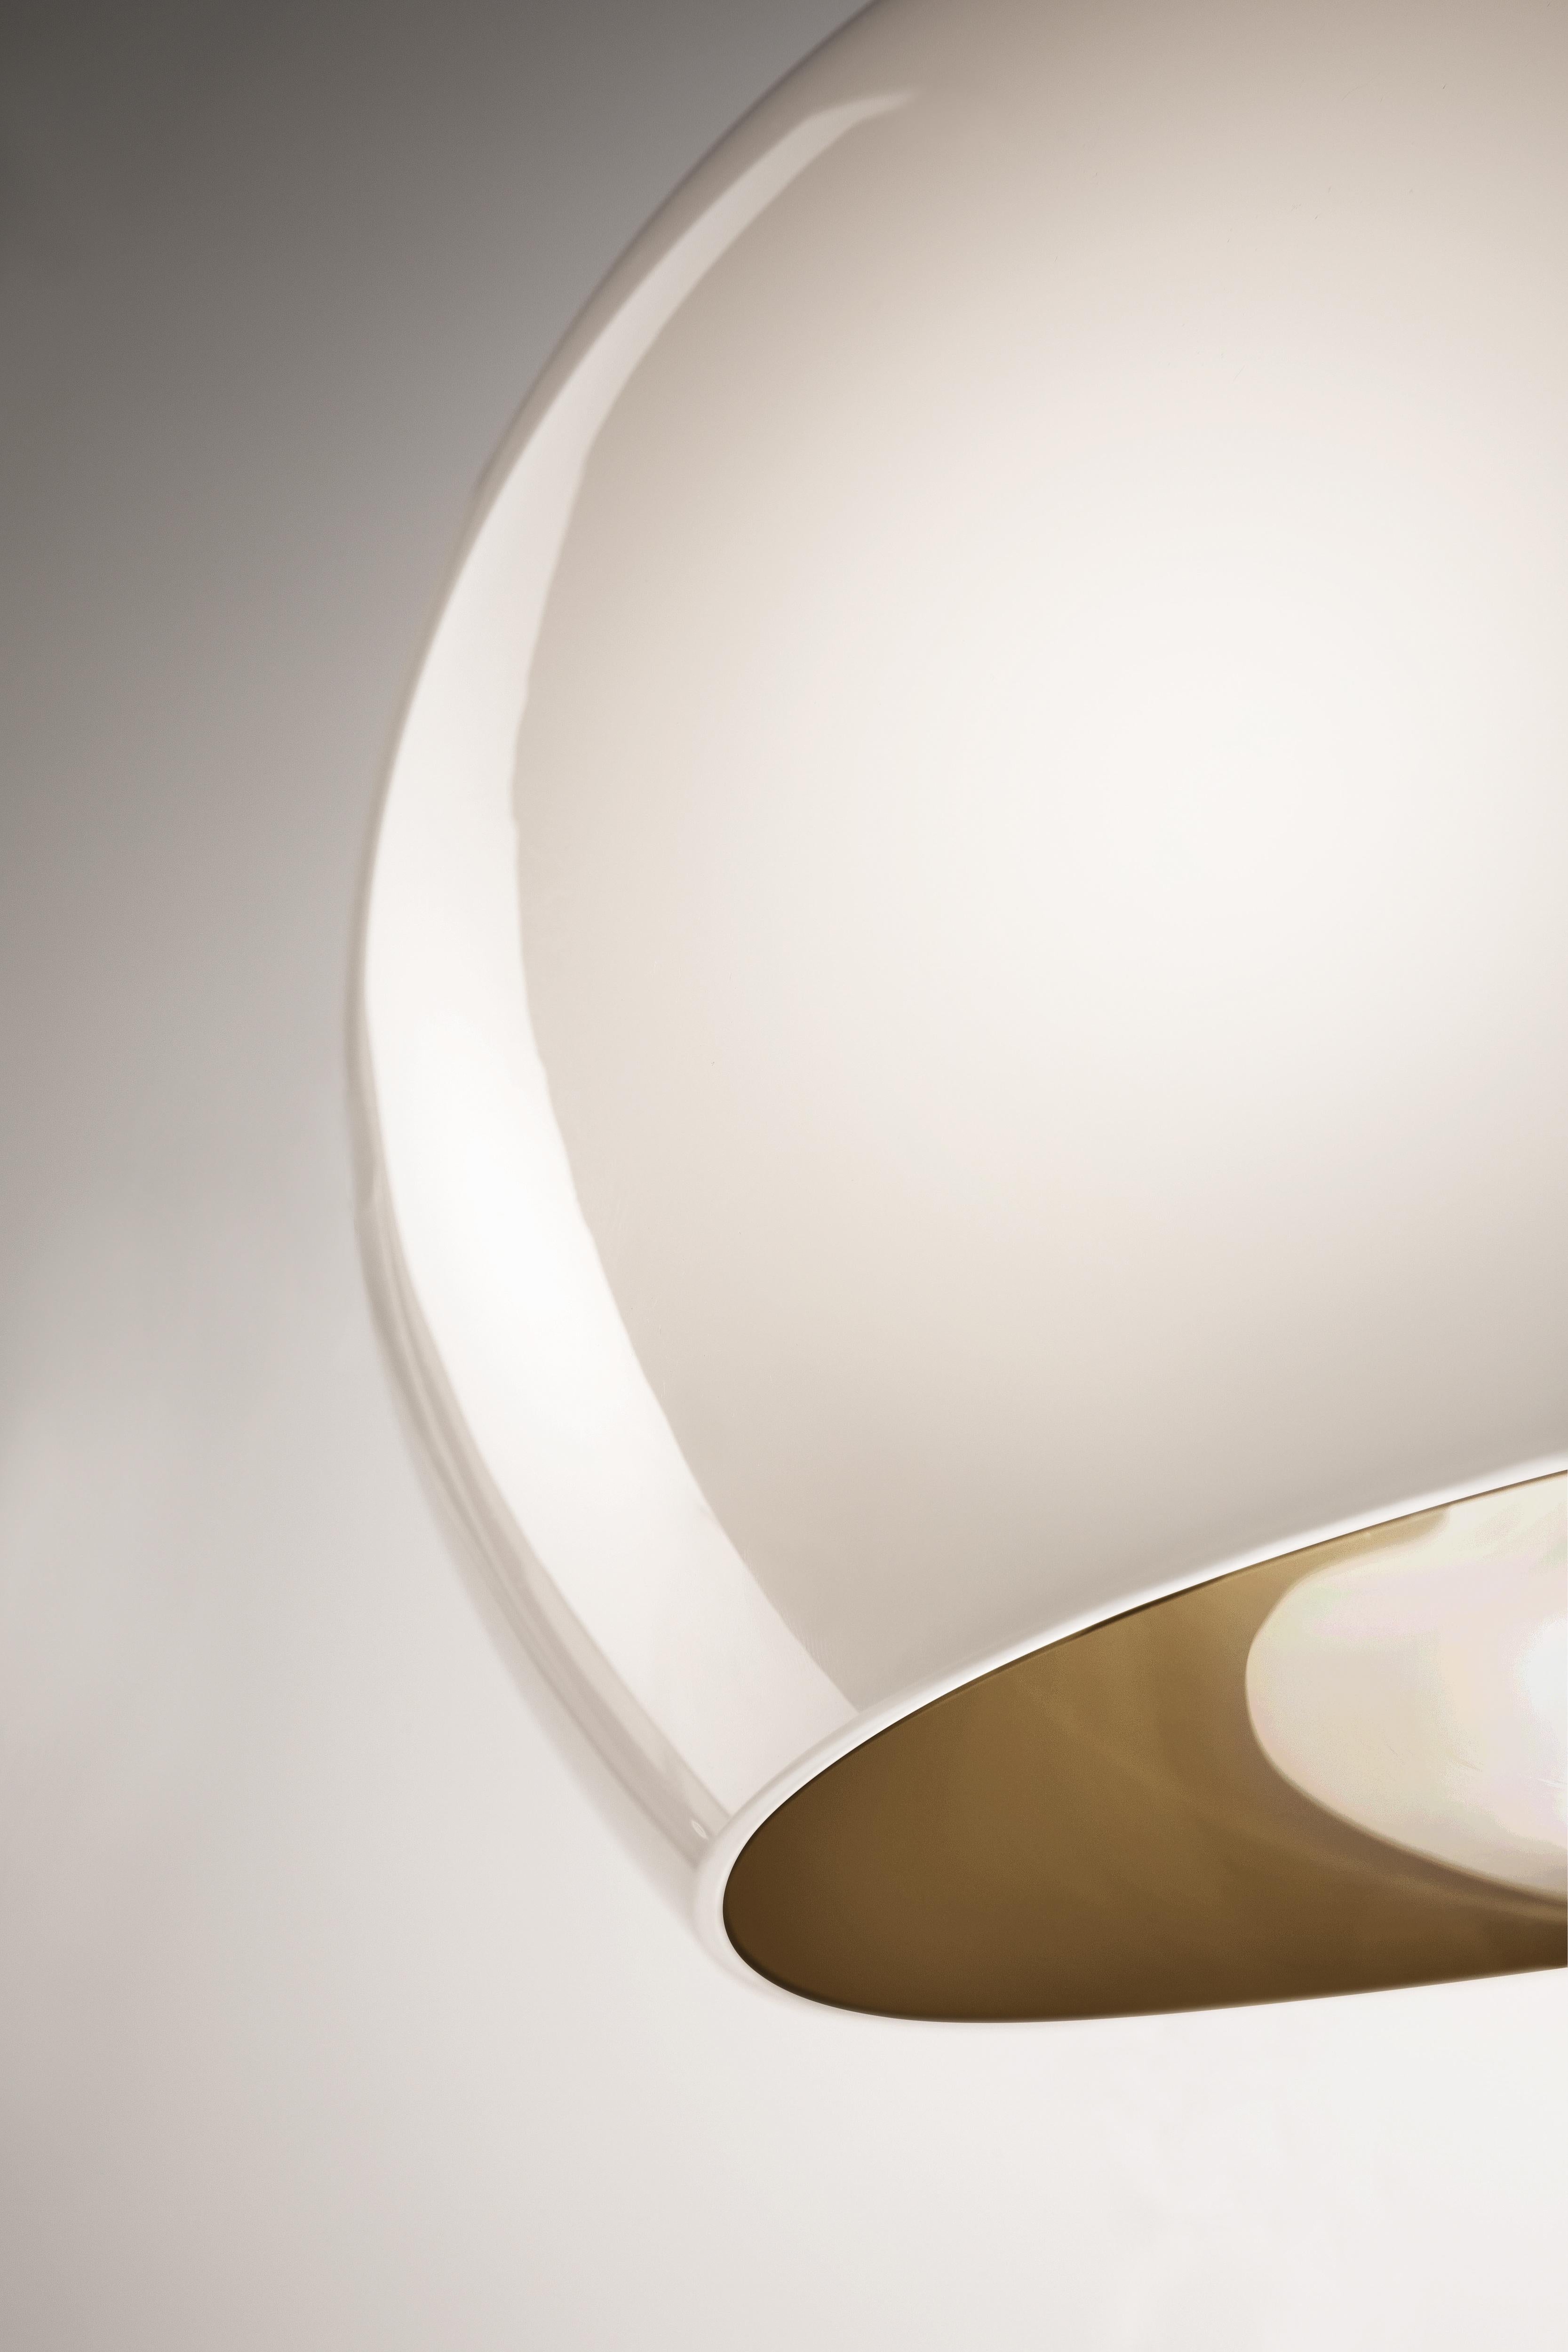 Modern Vistosi Surface SPP LED Pendant Light in White by Giovanni Barbato For Sale